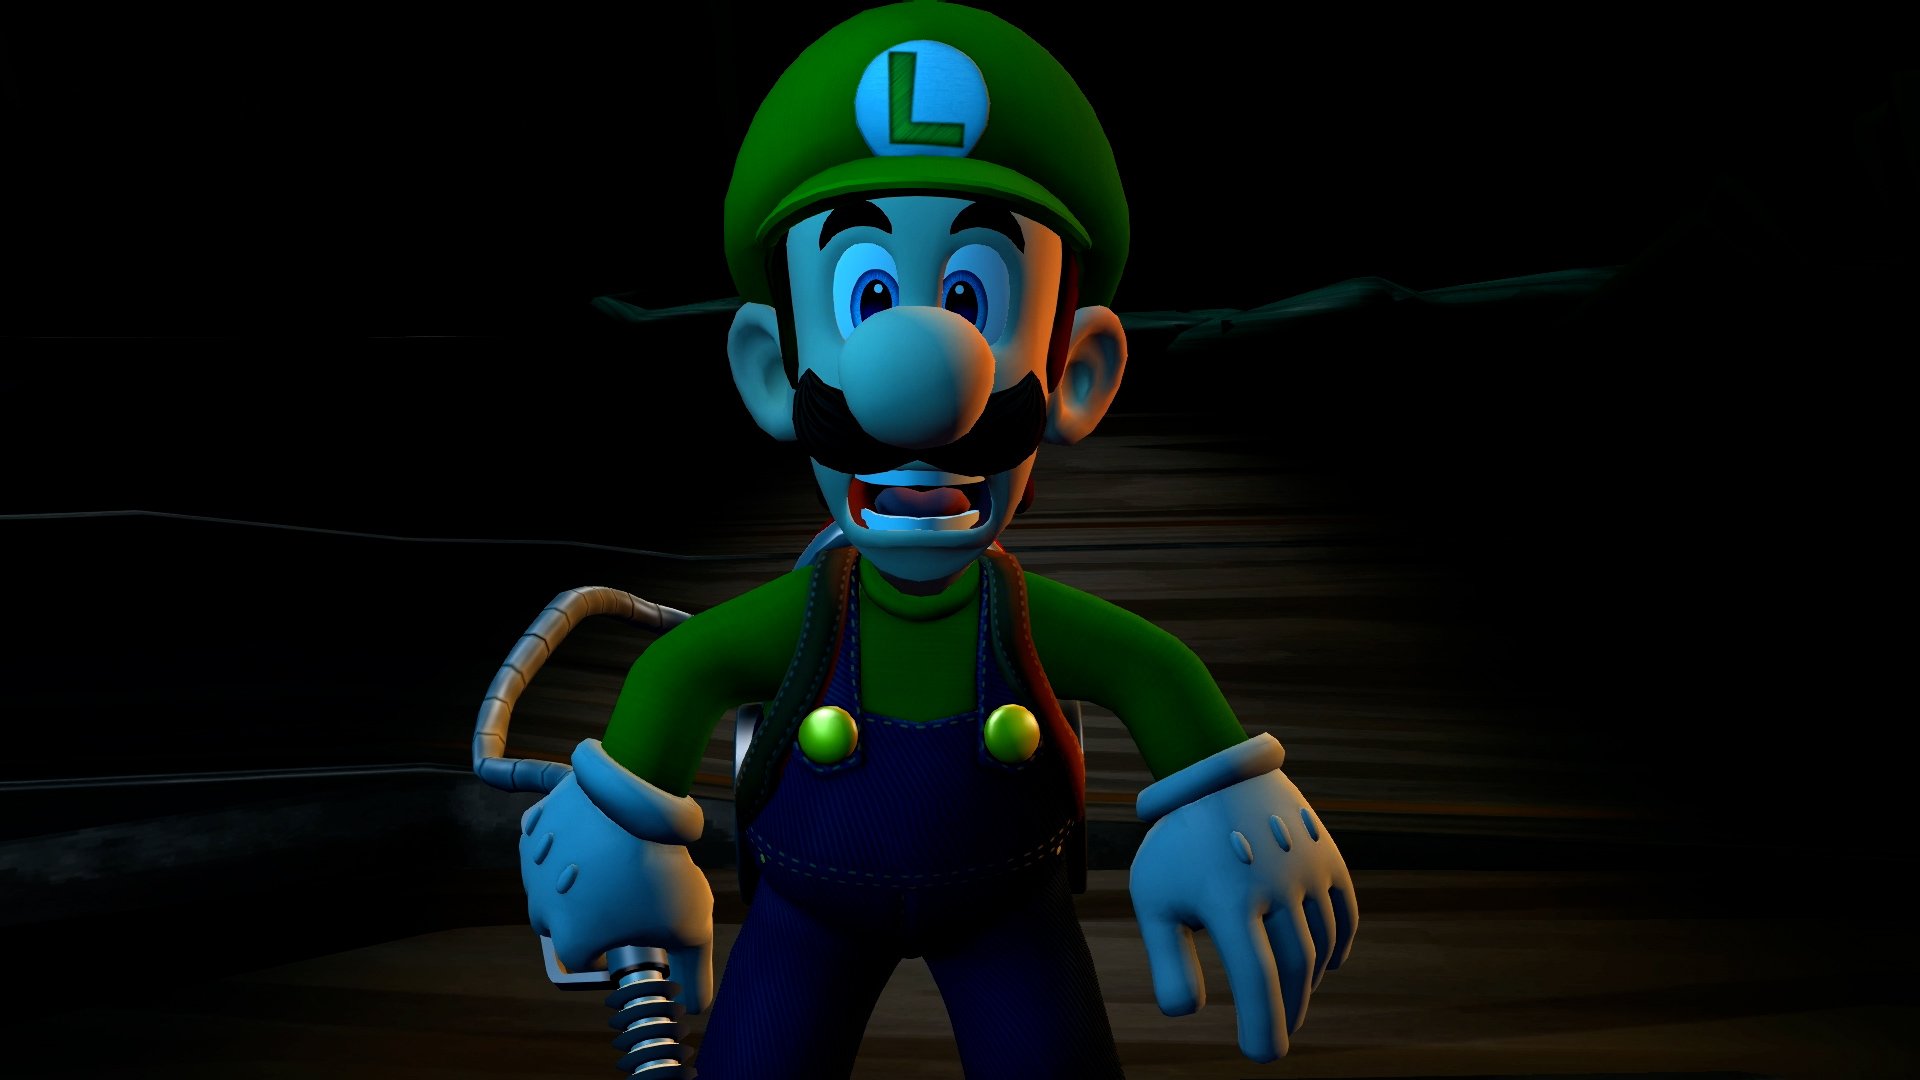 I've got Luigi's Mansion Dark Moon on my mind